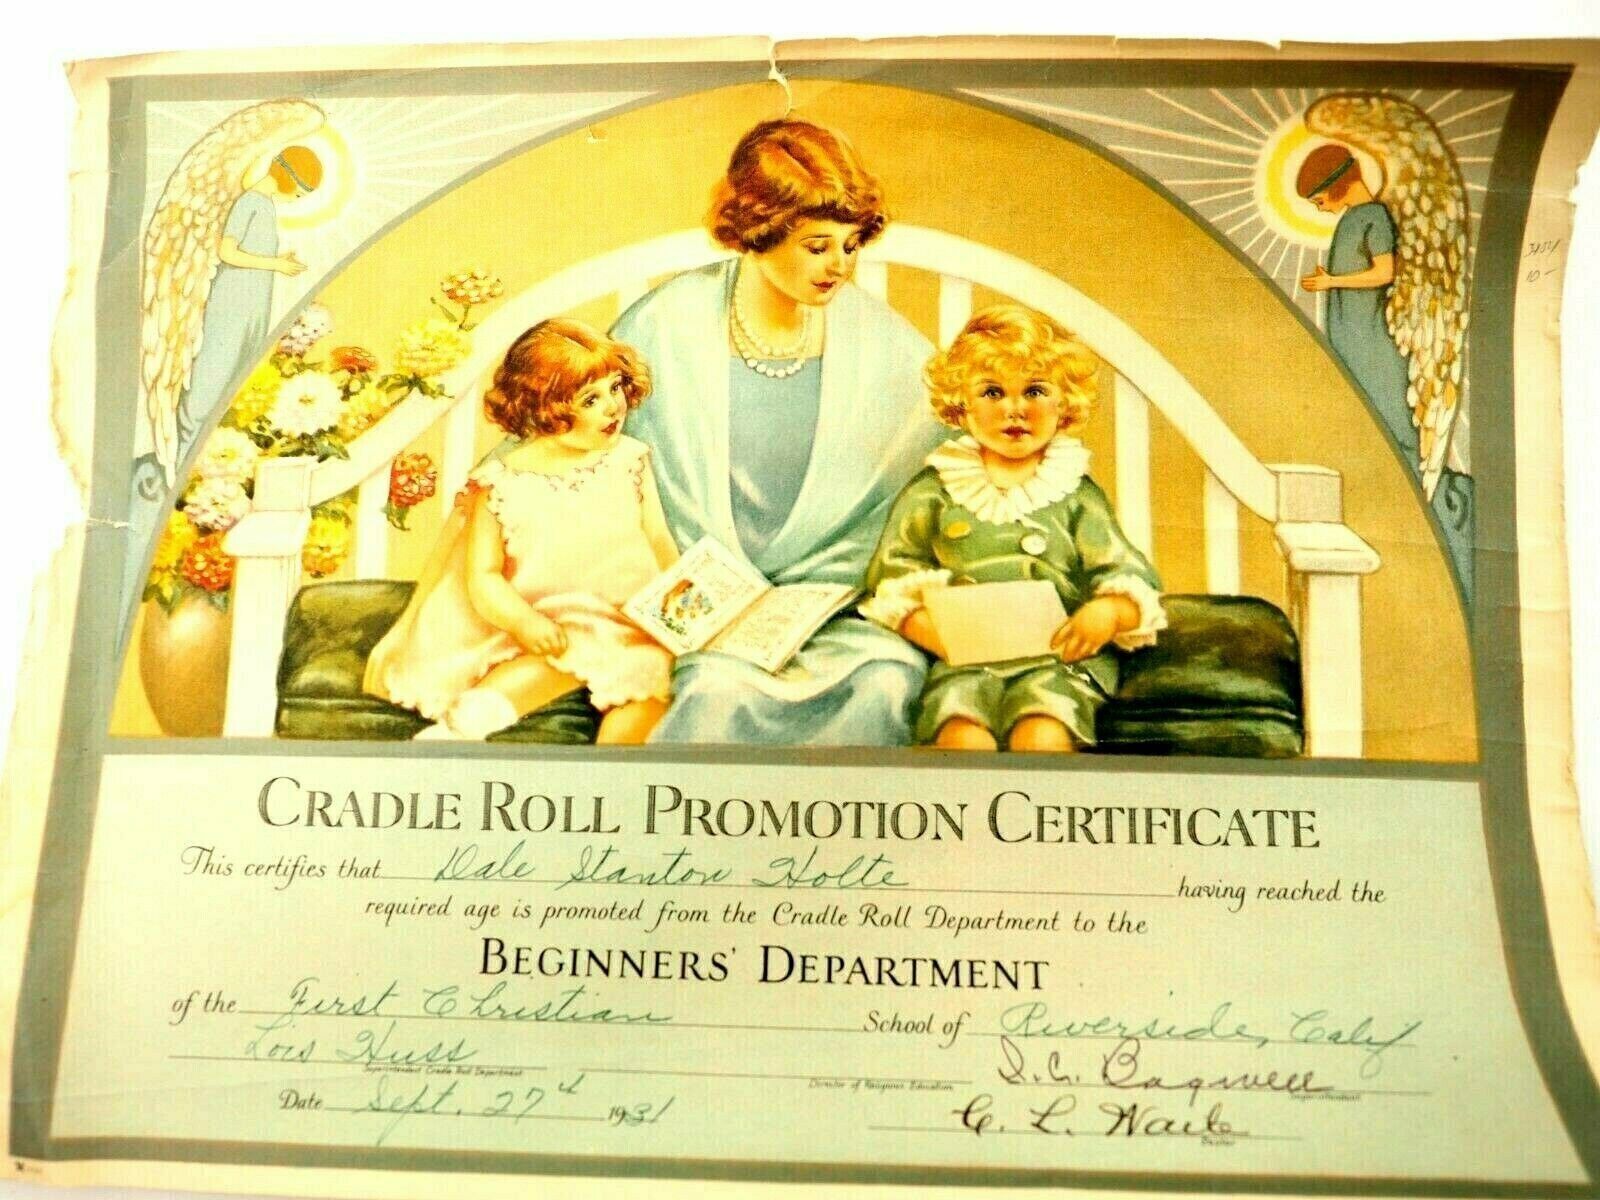 Cradle Roll Promotion Certificate Dale Holte Riverside Calif. 1931